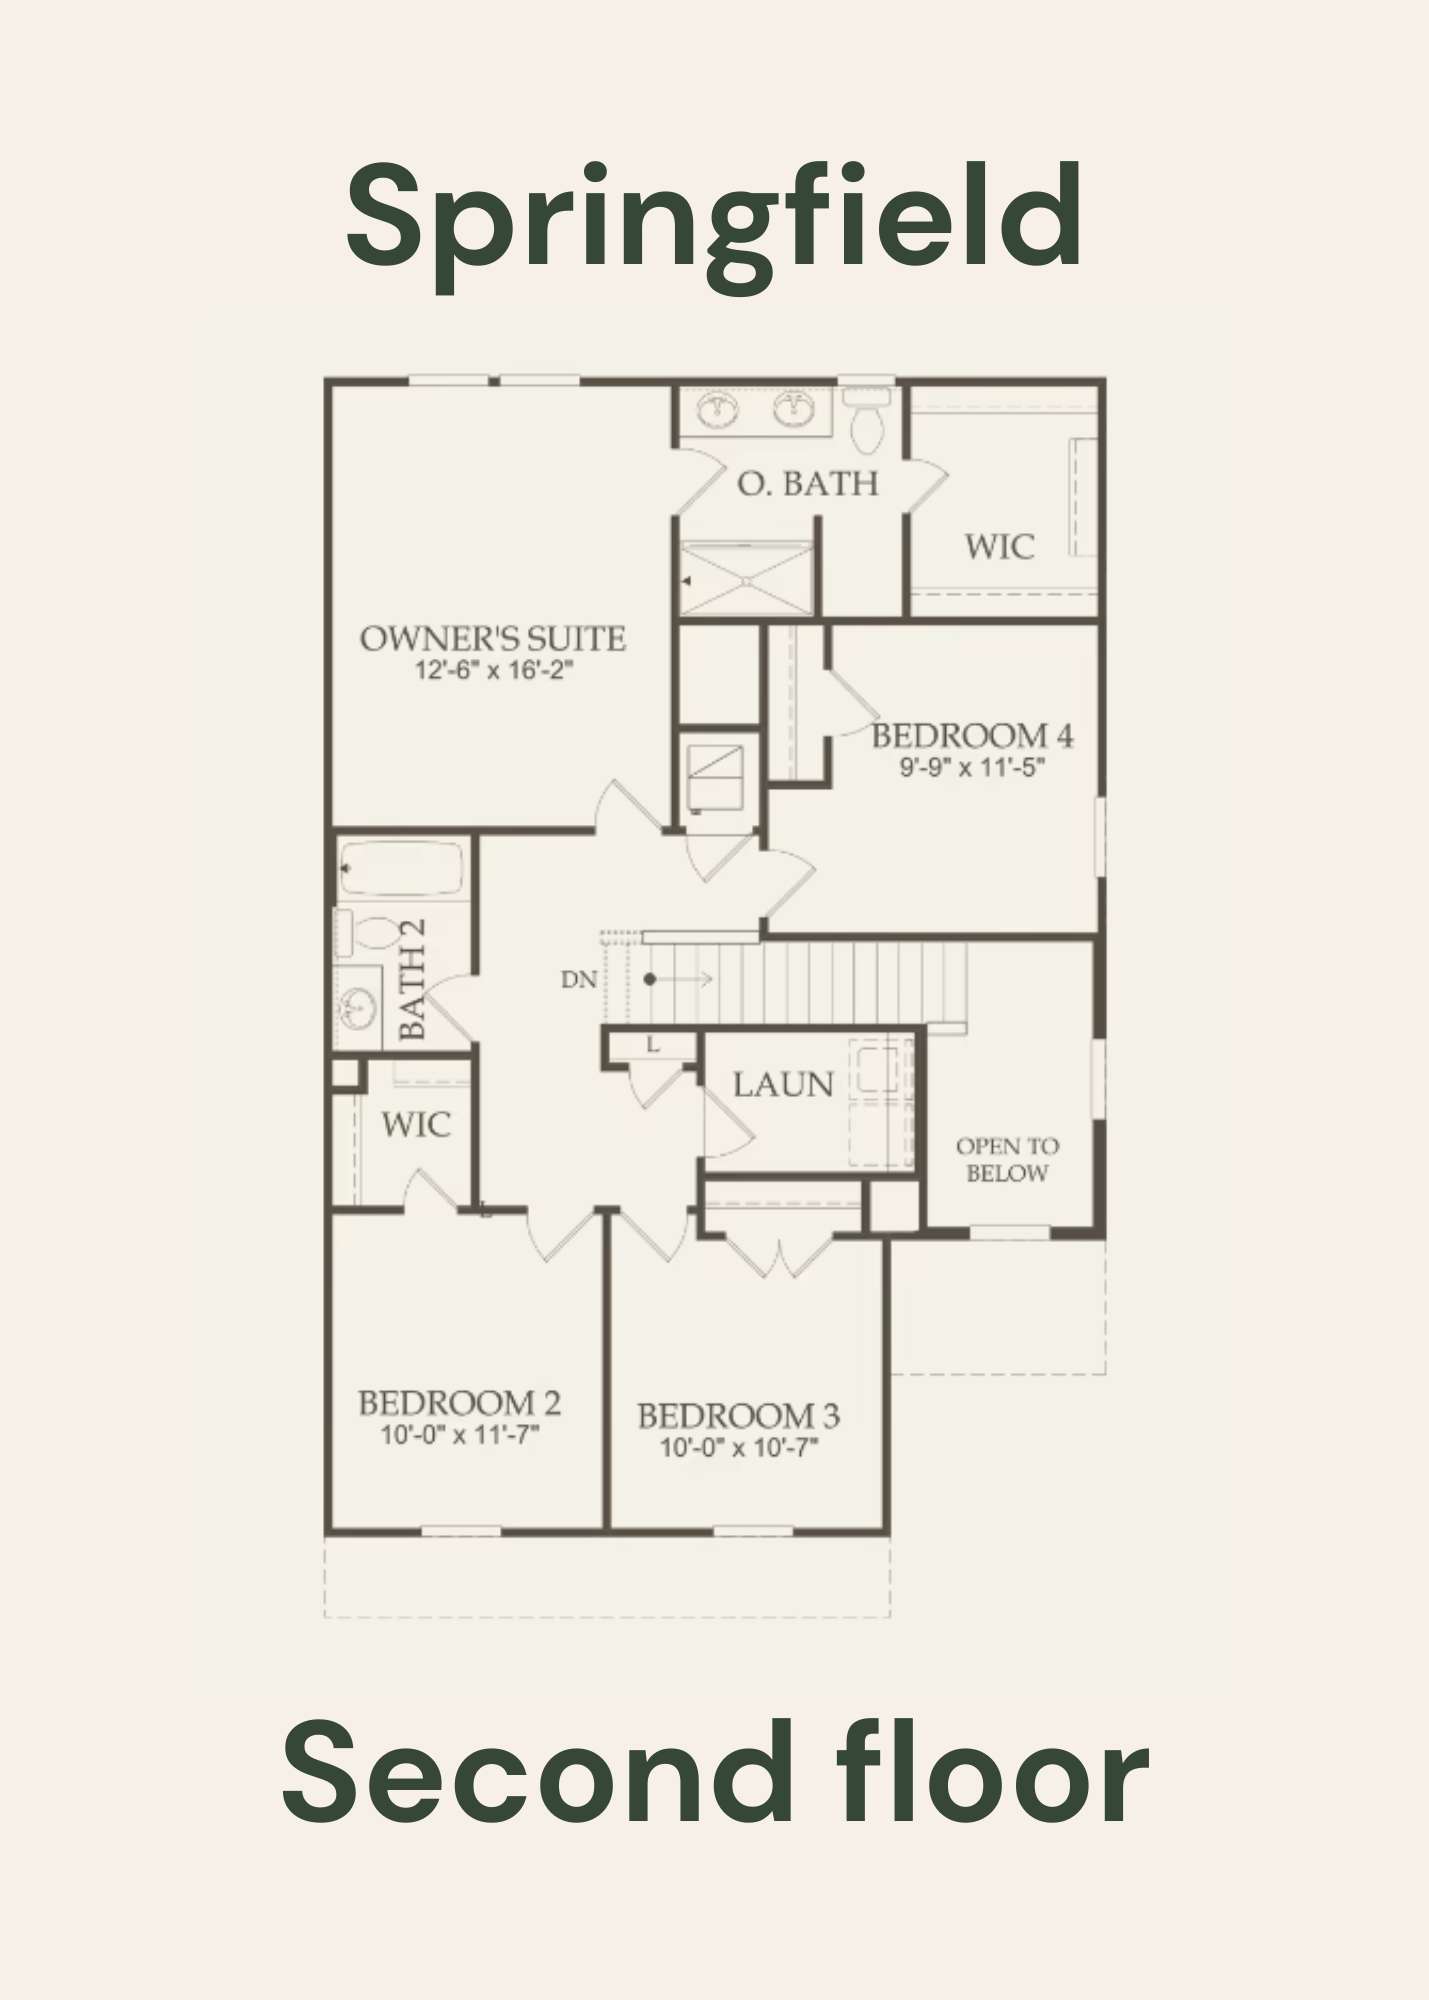 Springfiled Second Floor - Floor Plan by Centex Homes